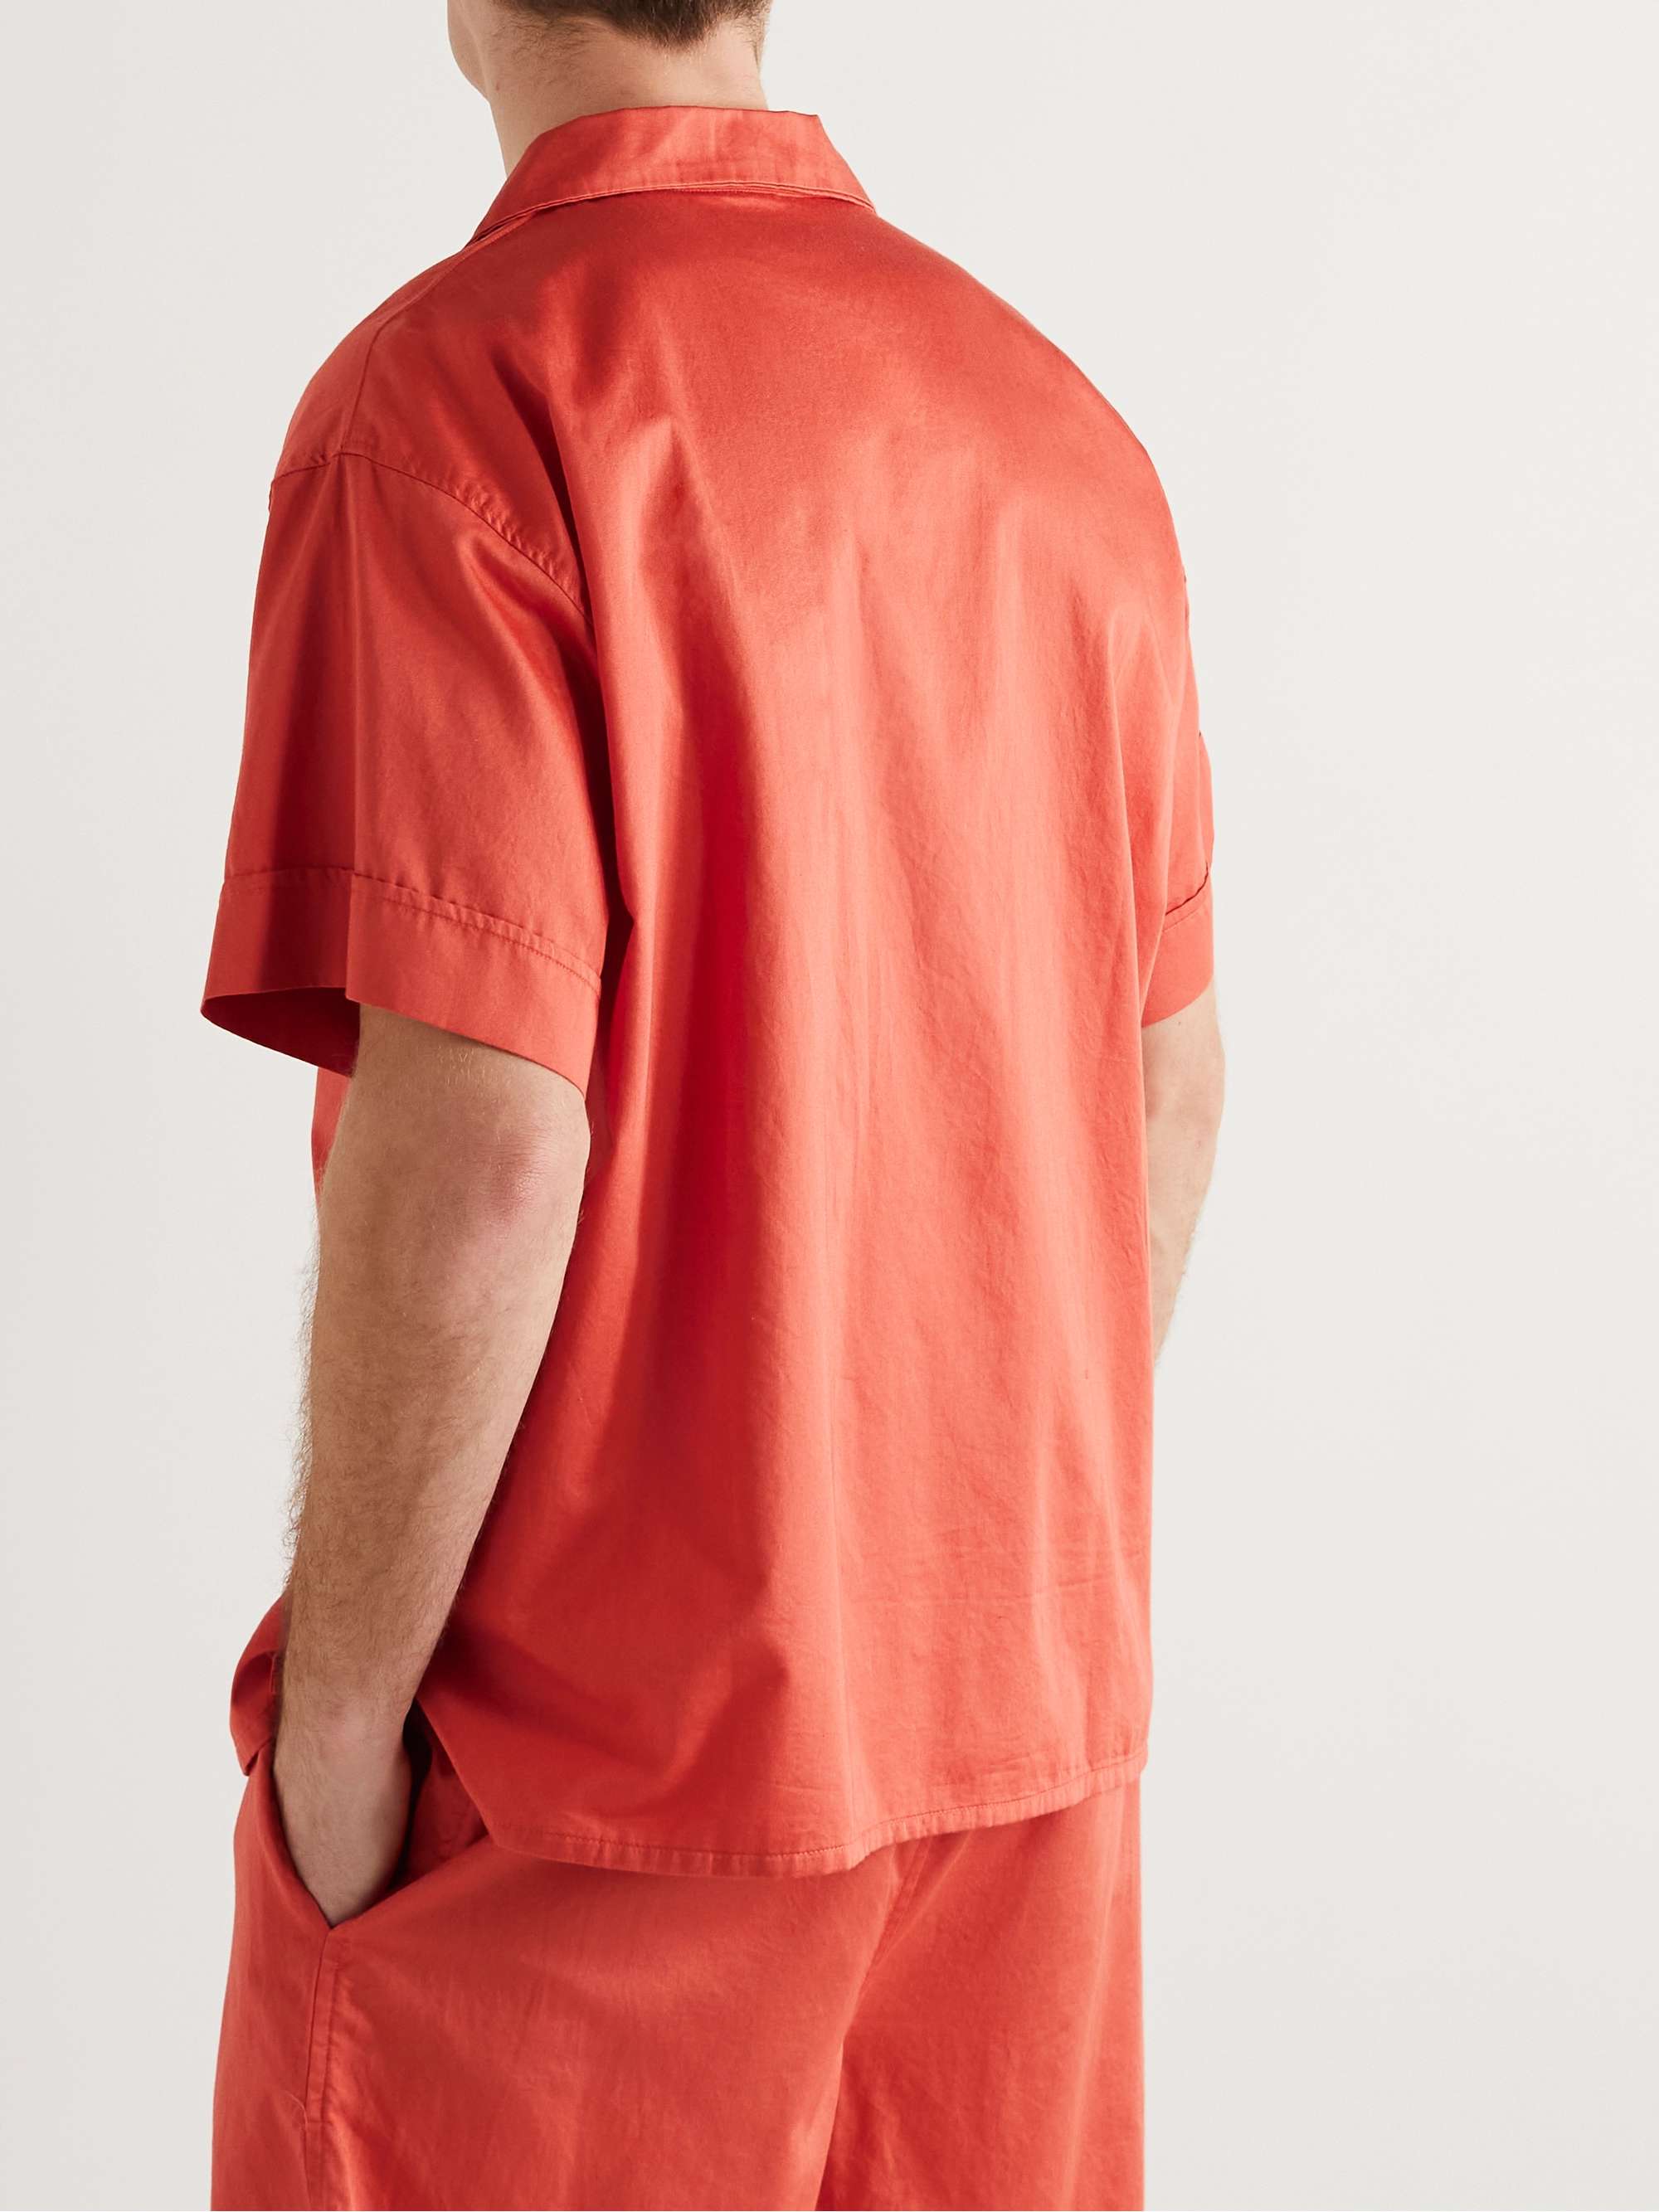 CLEVERLY LAUNDRY Camp-Collar Superfine Cotton Pyjama Shirt